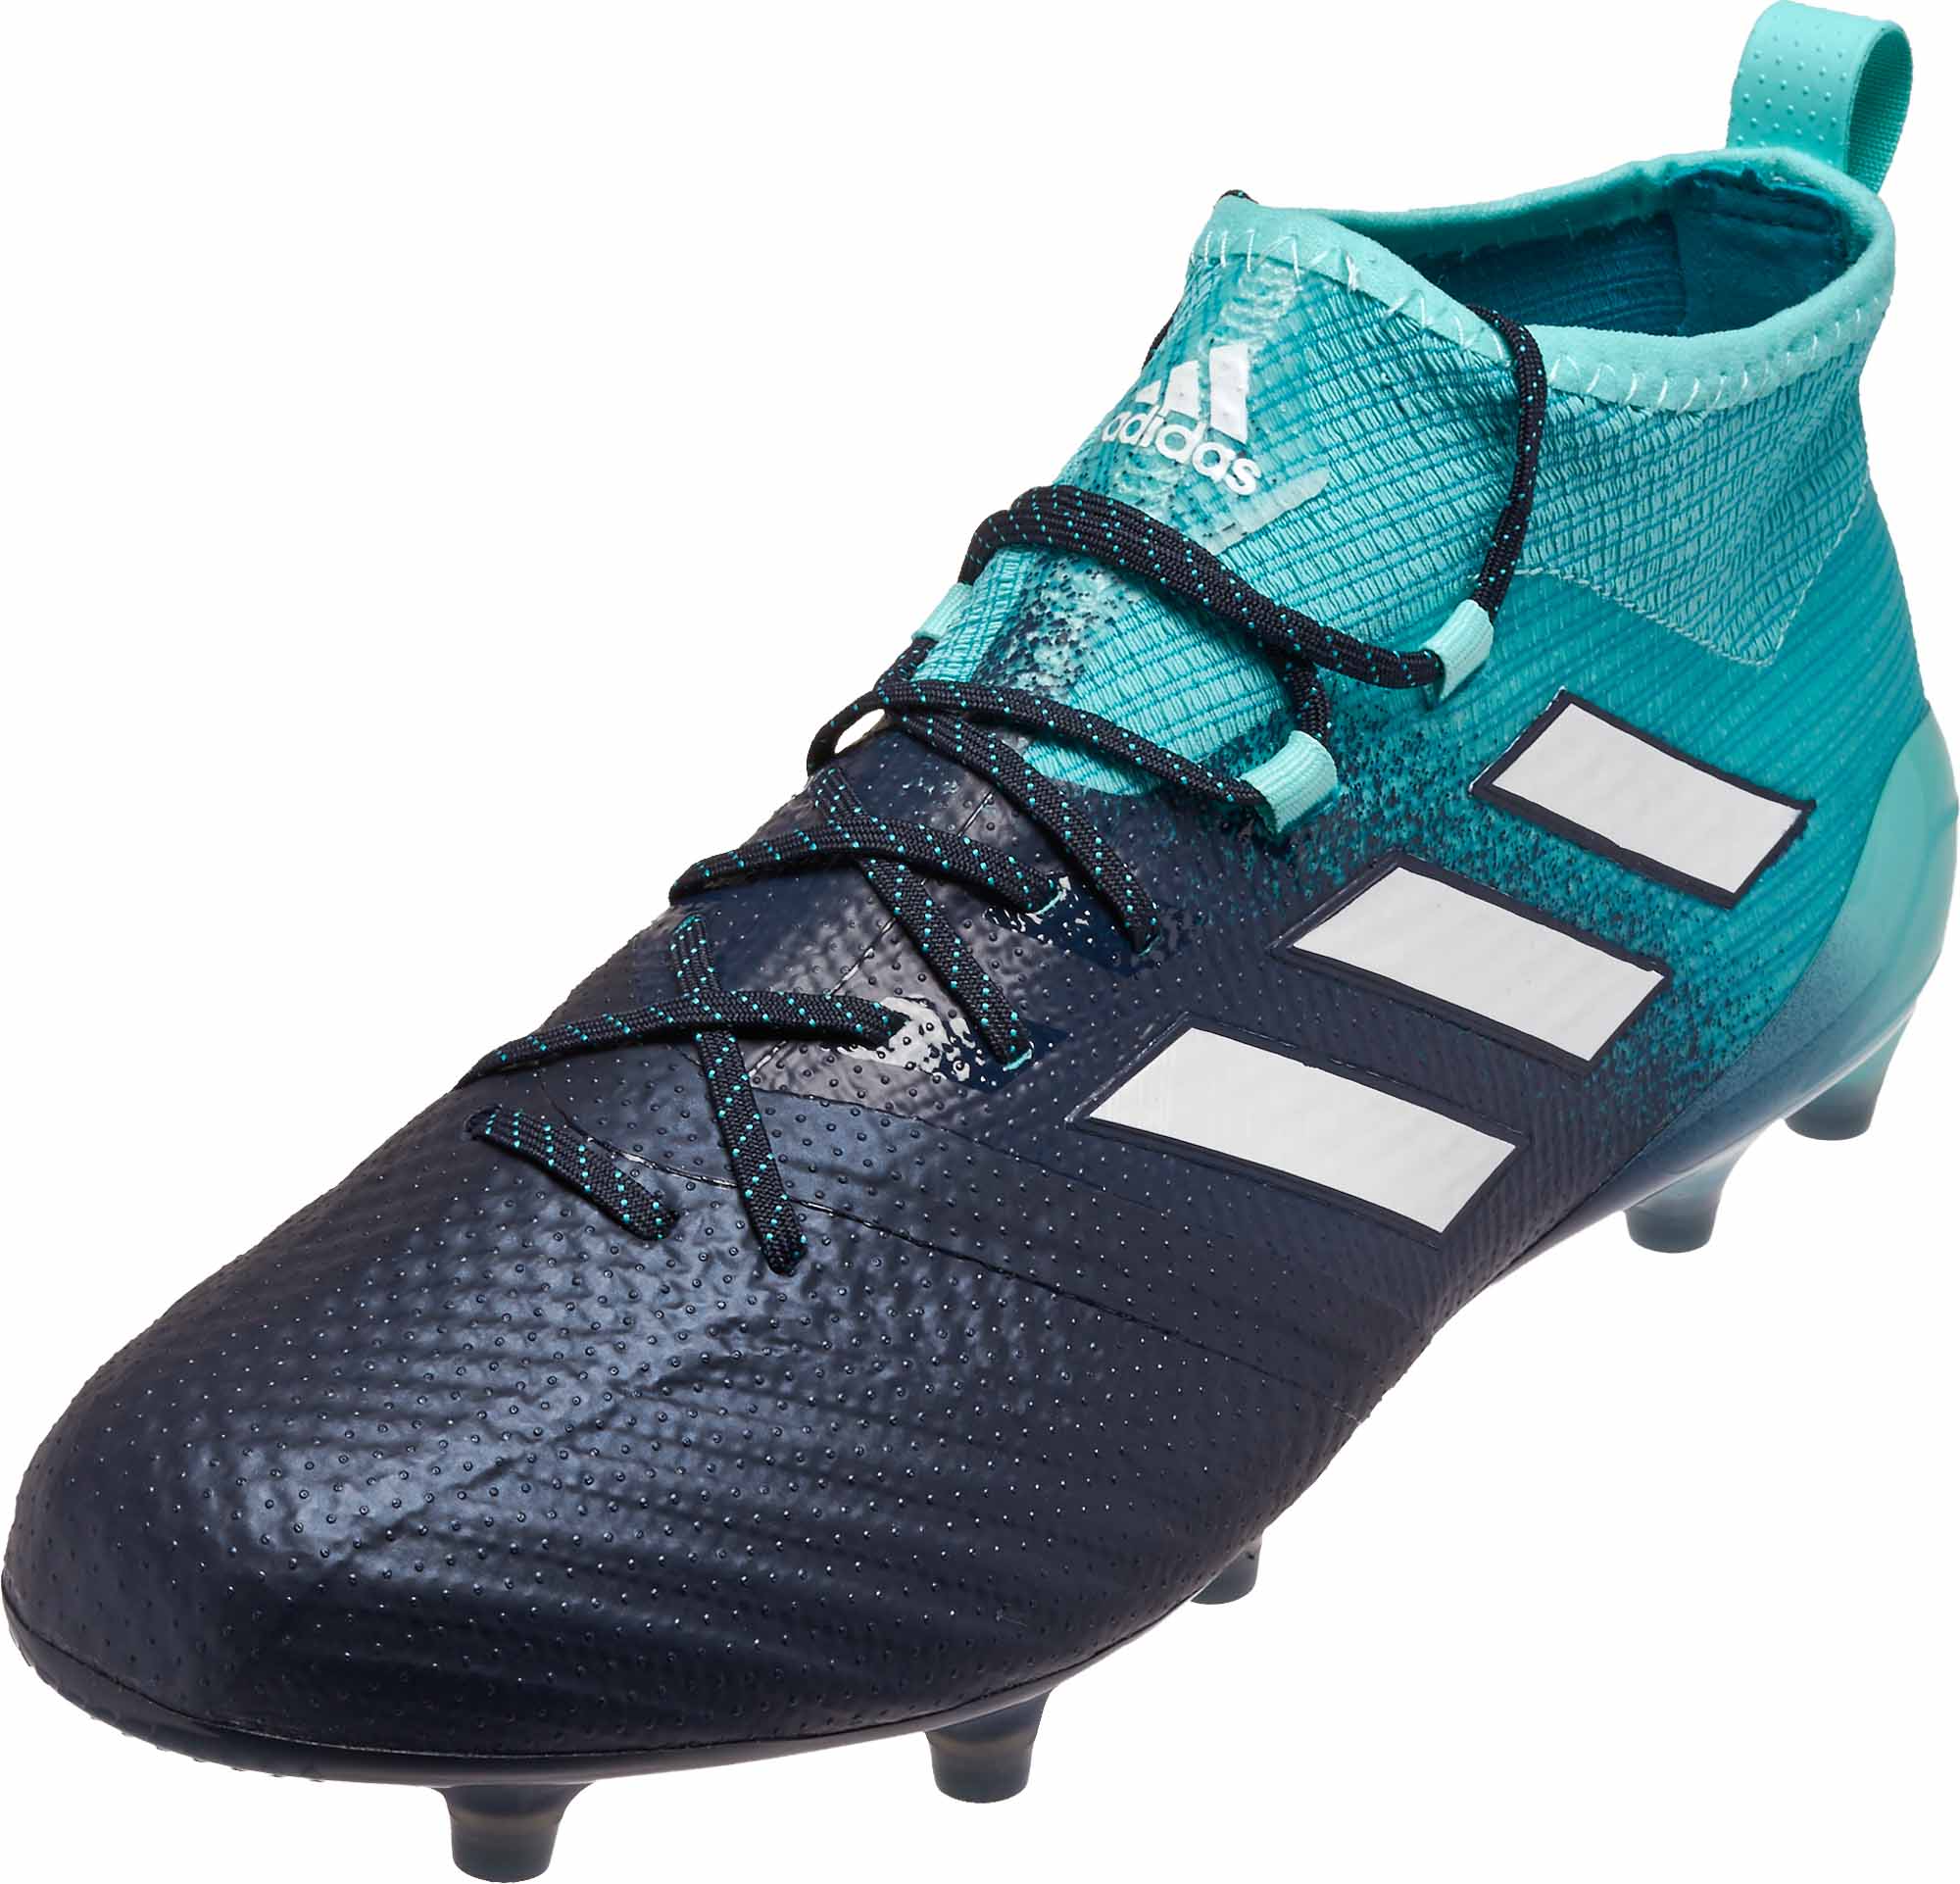 adidas ACE 17.1 FG - Blue adidas Soccer Cleats